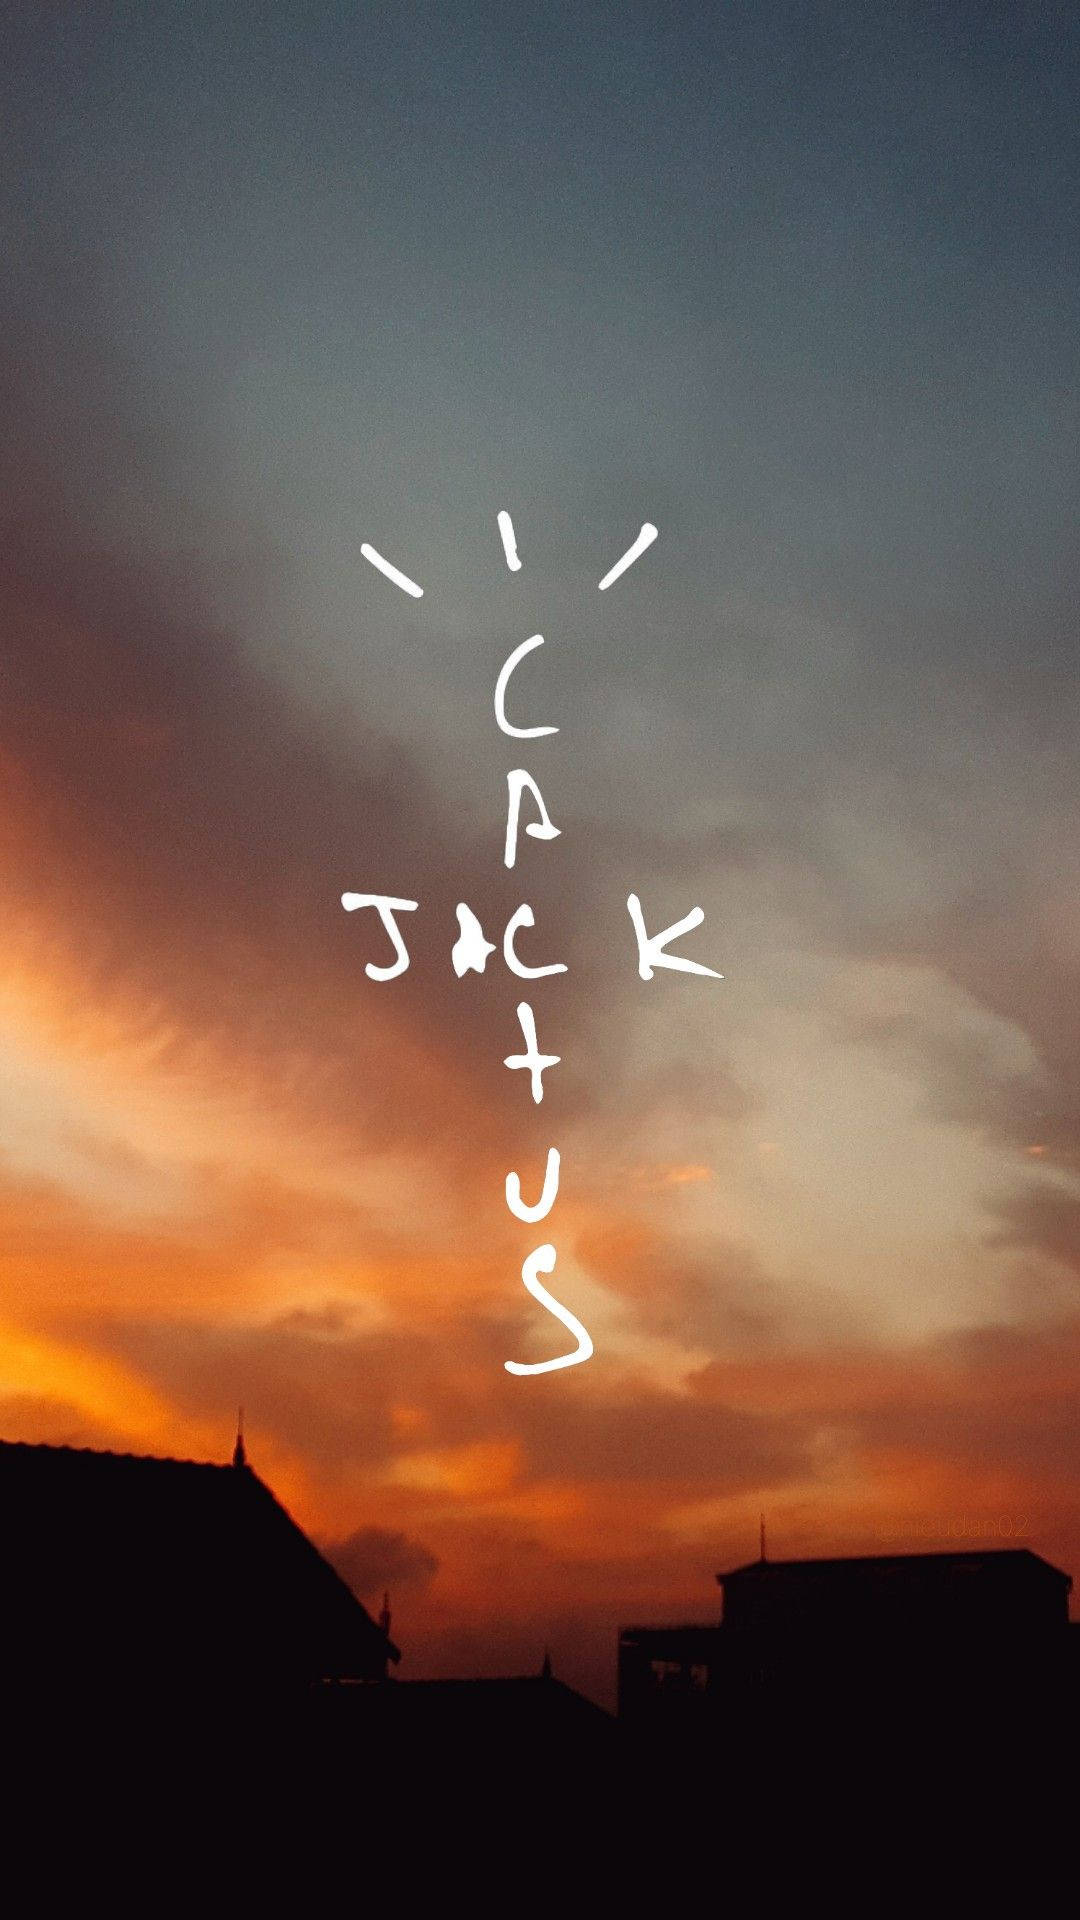 Cactus Jack And Sunset